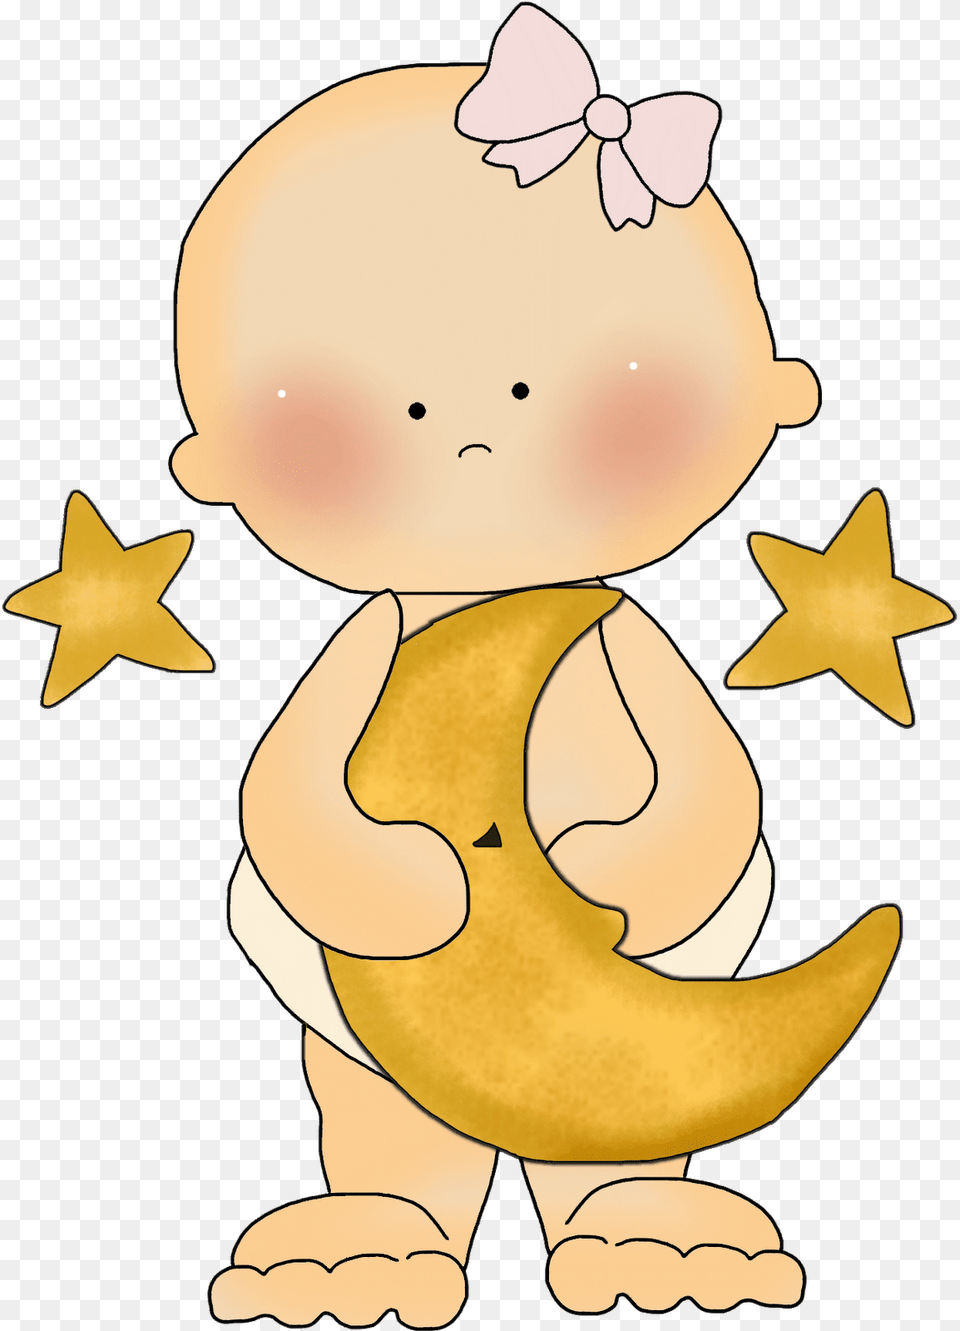 Bebes Para Baby Shower Dibujos De Baby Shower Bebes Dibujos, Person, Banana, Food, Fruit Png Image